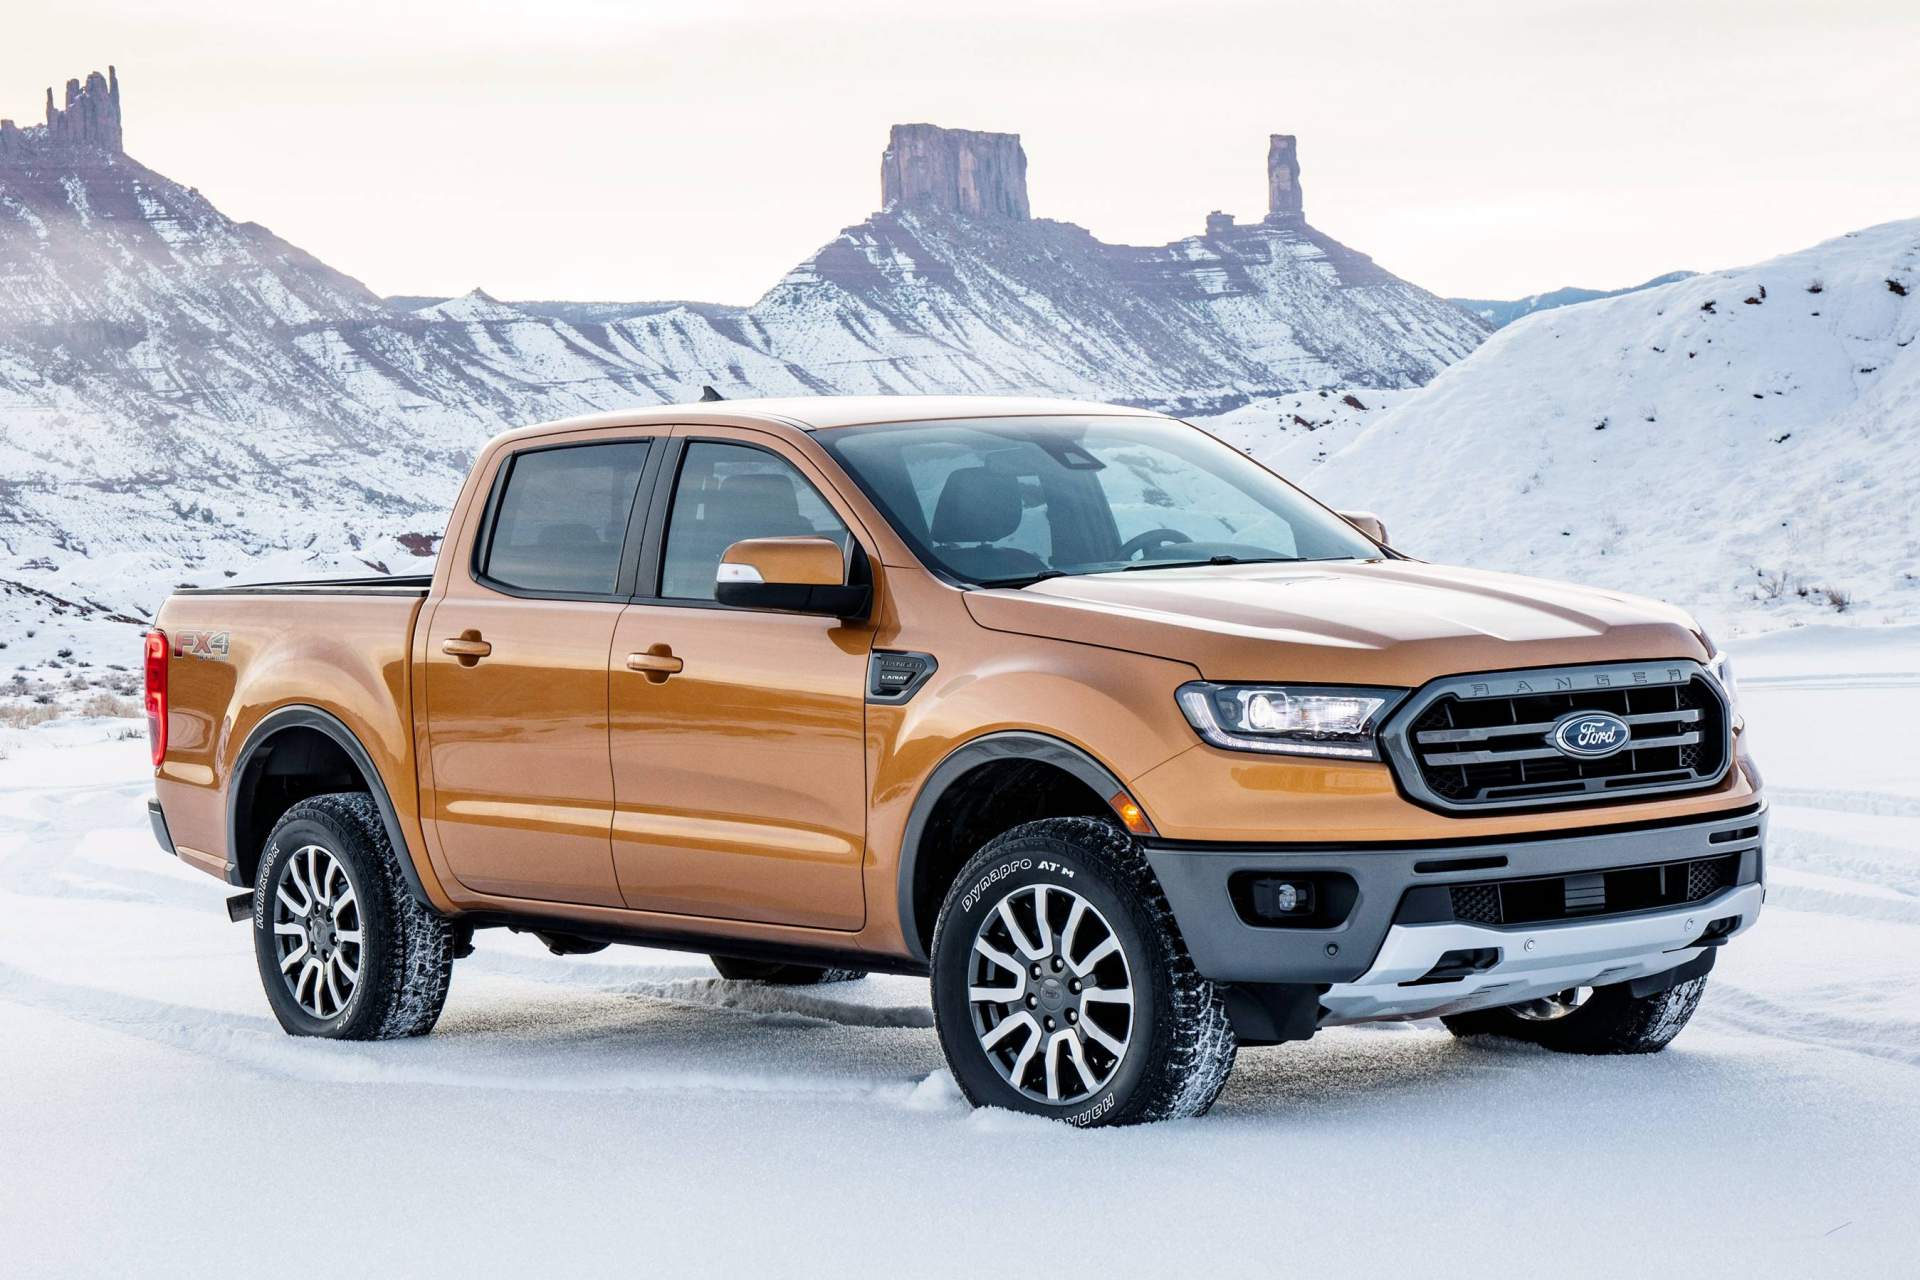 ABD'de en az yakıt tüketen pickup 2019 Ford Ranger oldu